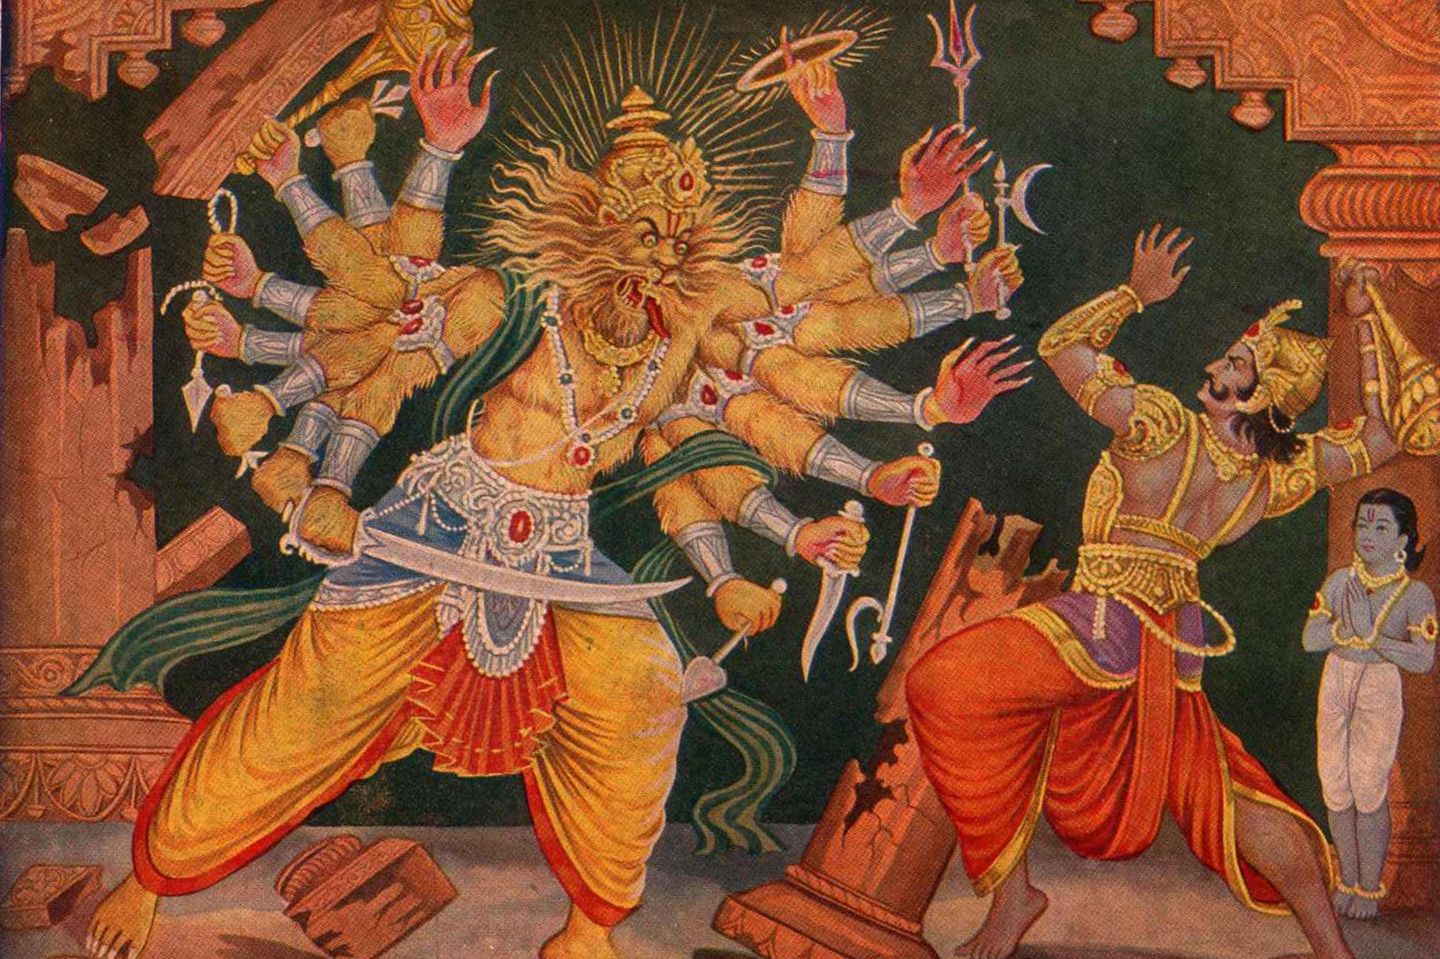 Narasinha greift Hiranyakashipu an - Aus einer Bhagavata Purana (um 18. Jh.)